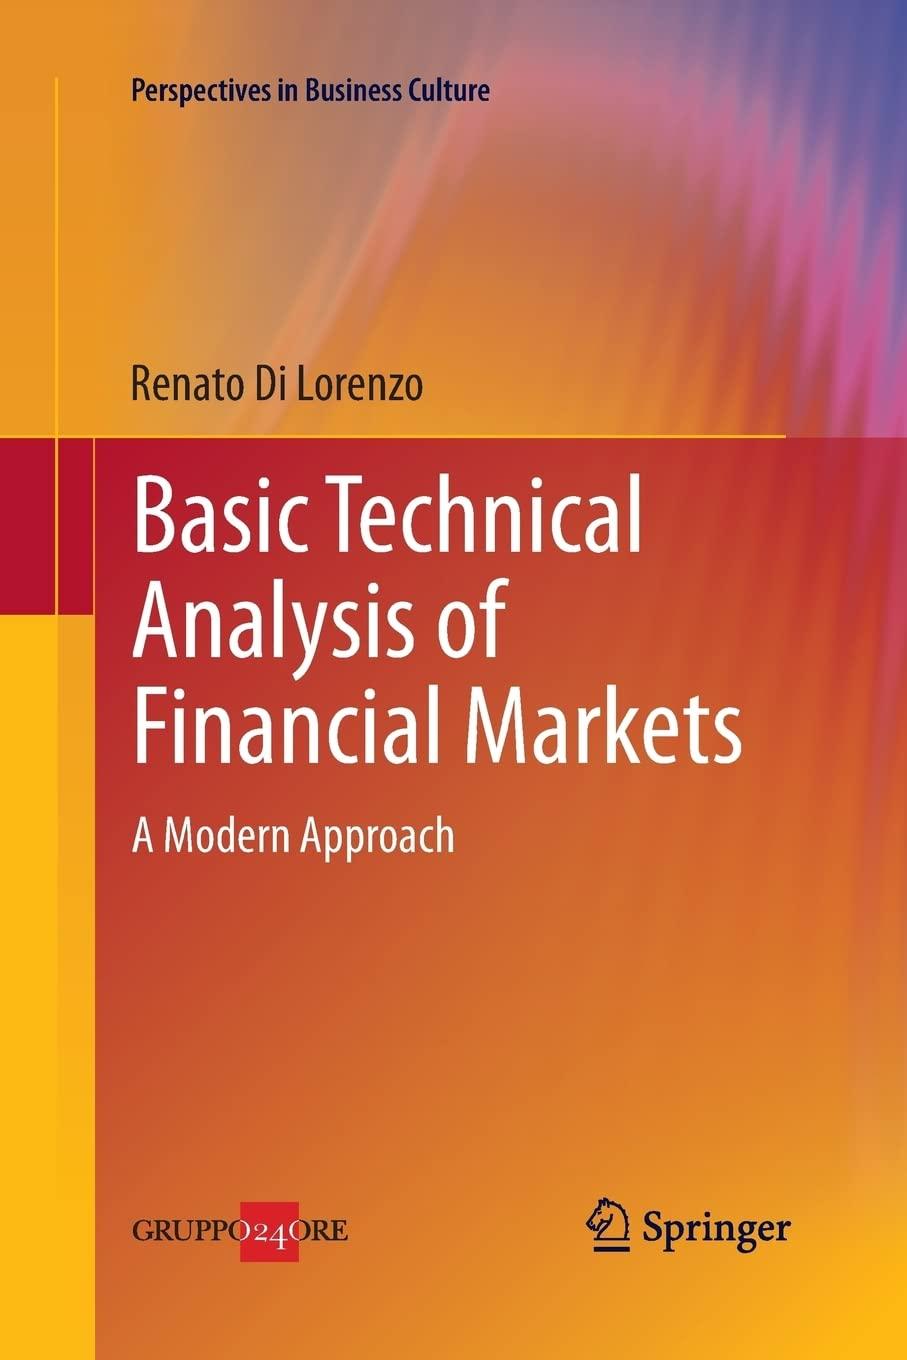 basic technical analysis of financial markets: 2013th edition renato di lorenzo 8847055628, 978-8847055629